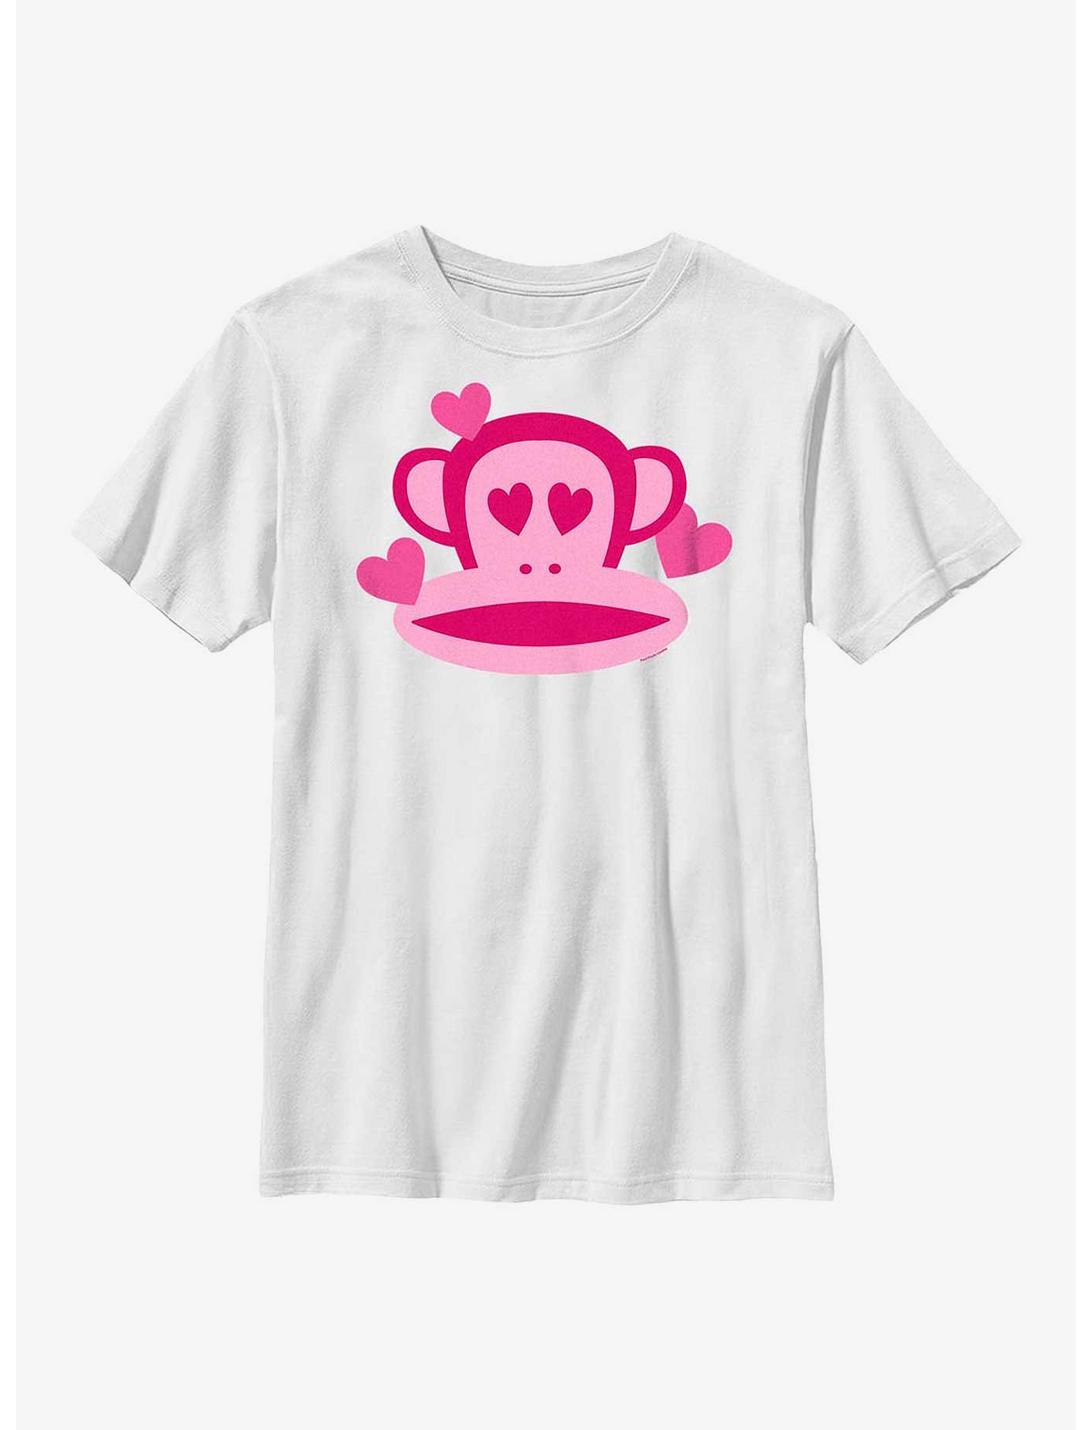 Paul Frank Julius Monkey Heart Youth T-Shirt, WHITE, hi-res